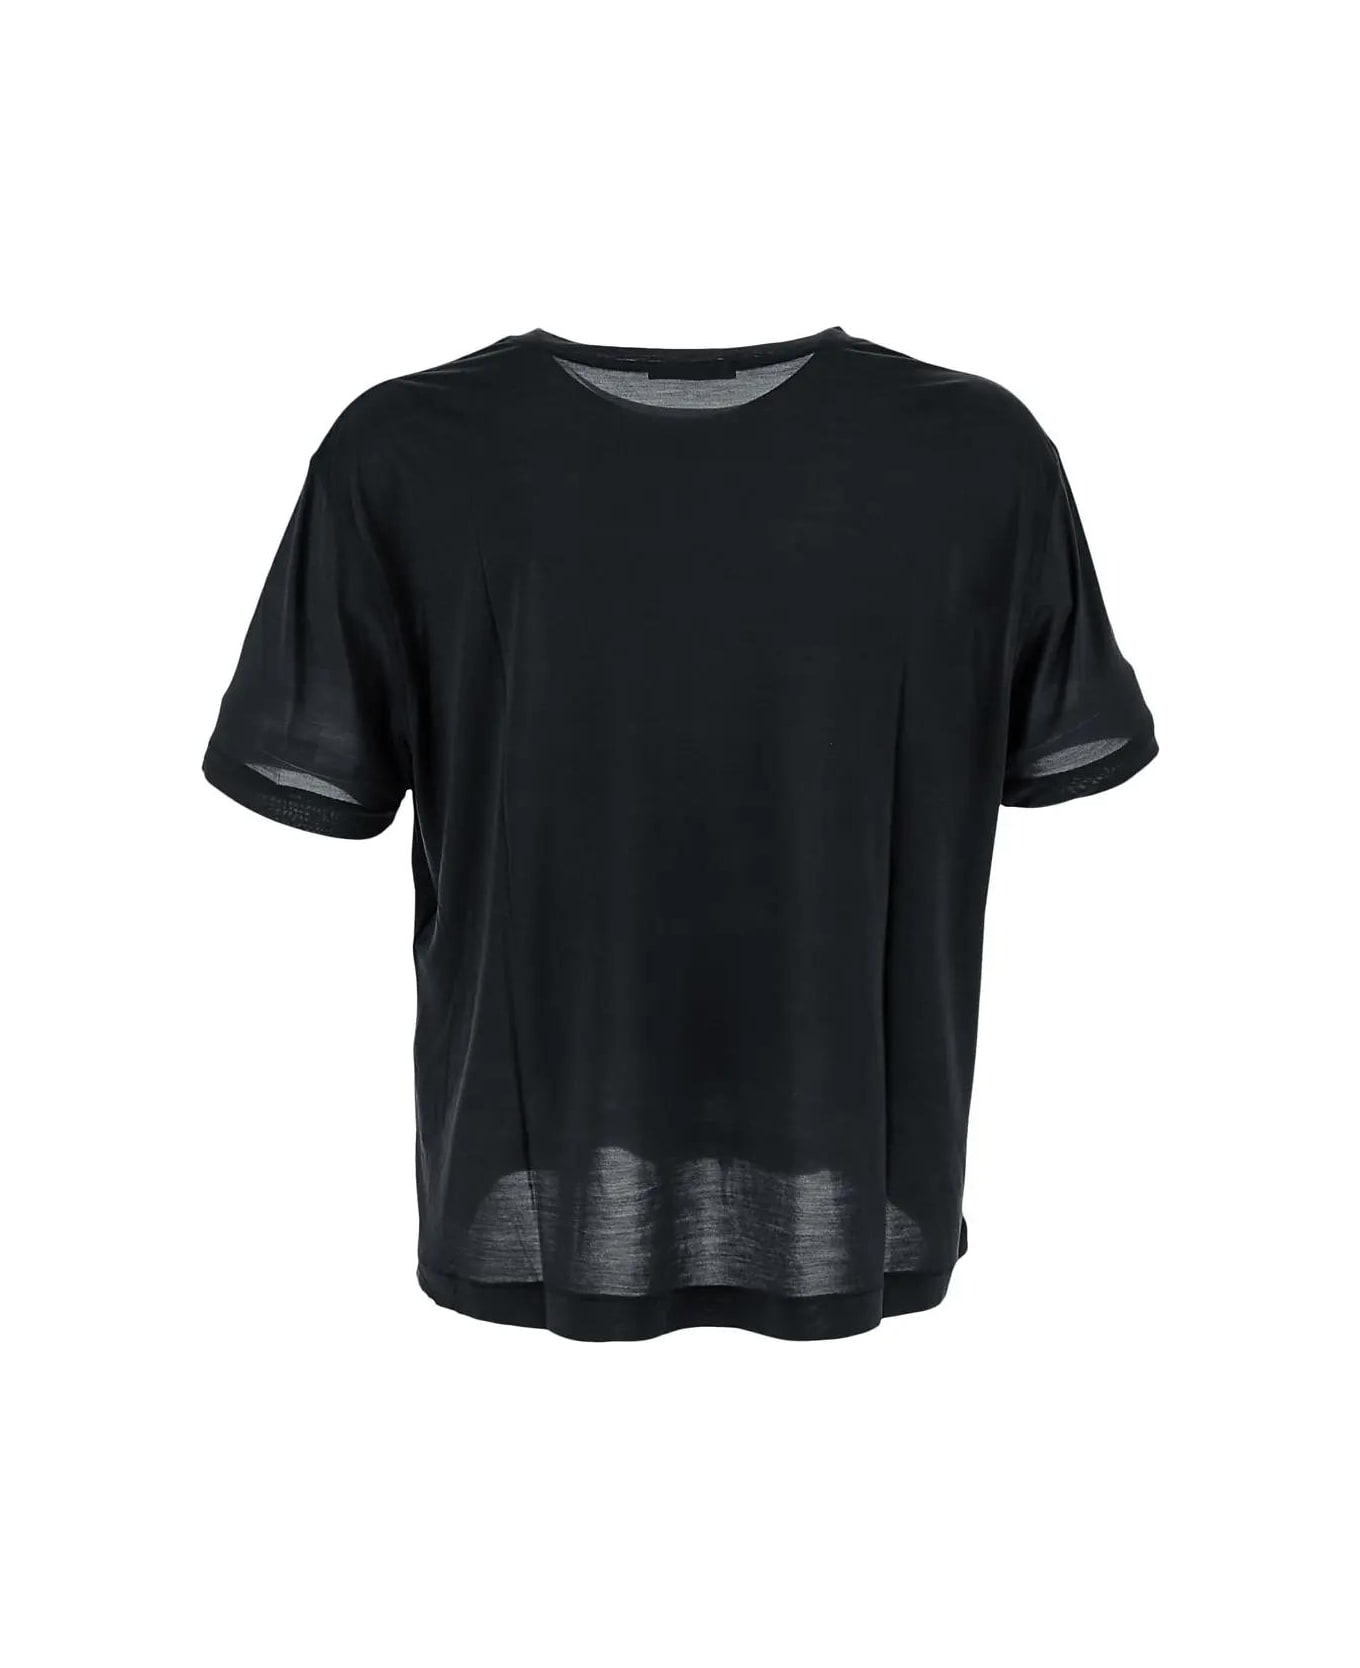 Lemaire Essential T-shirt - Black